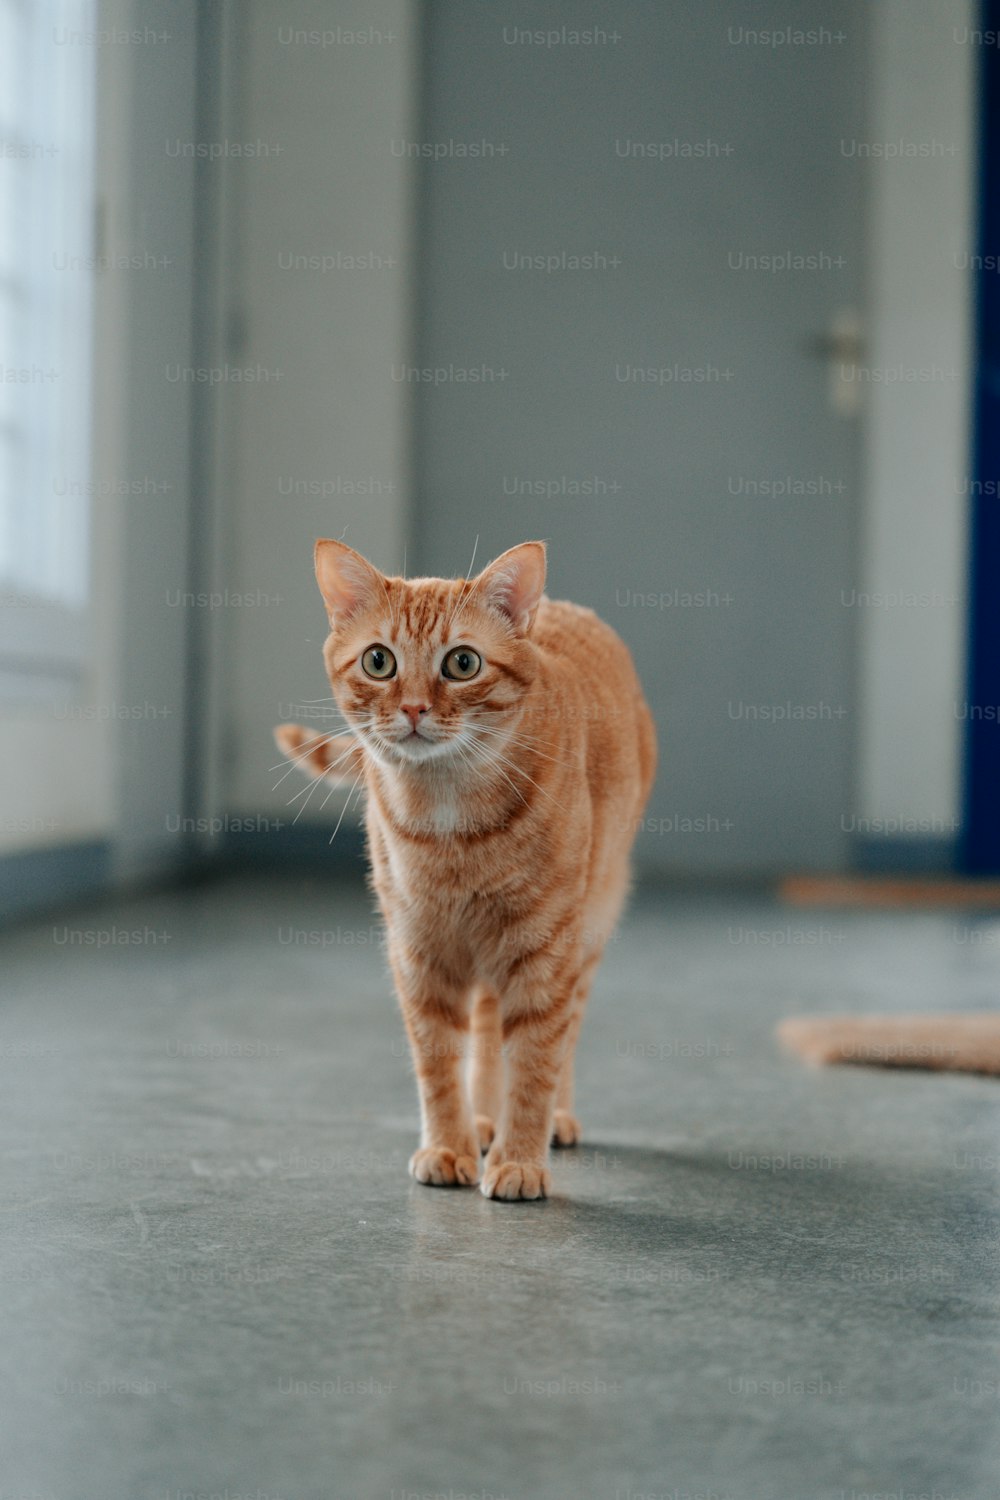 Un pequeño gato naranja caminando por un suelo